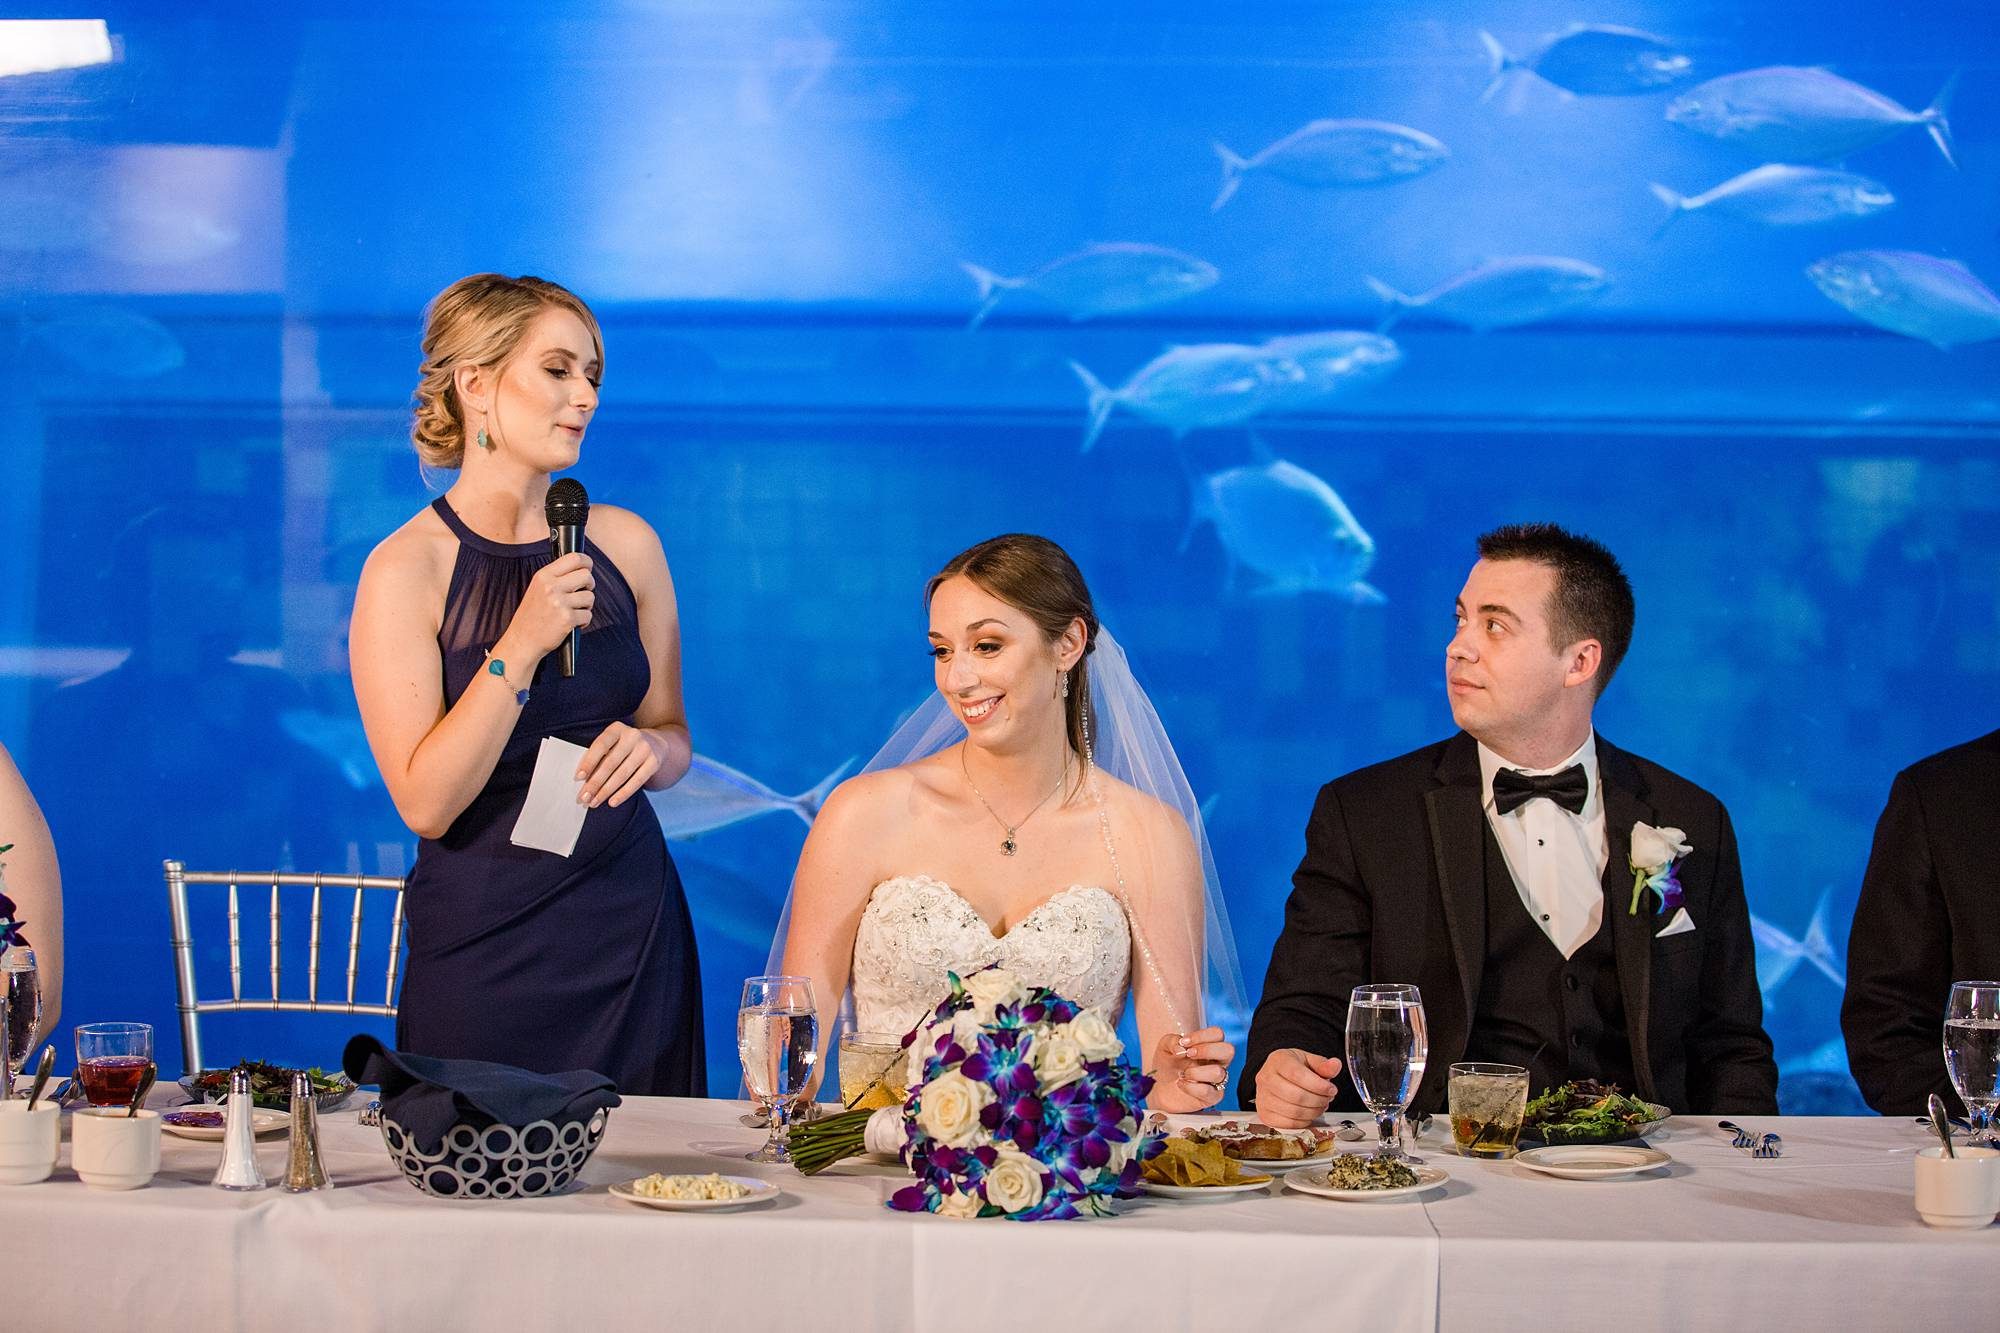 Toledo Zoo Aquarium wedding reception photographs